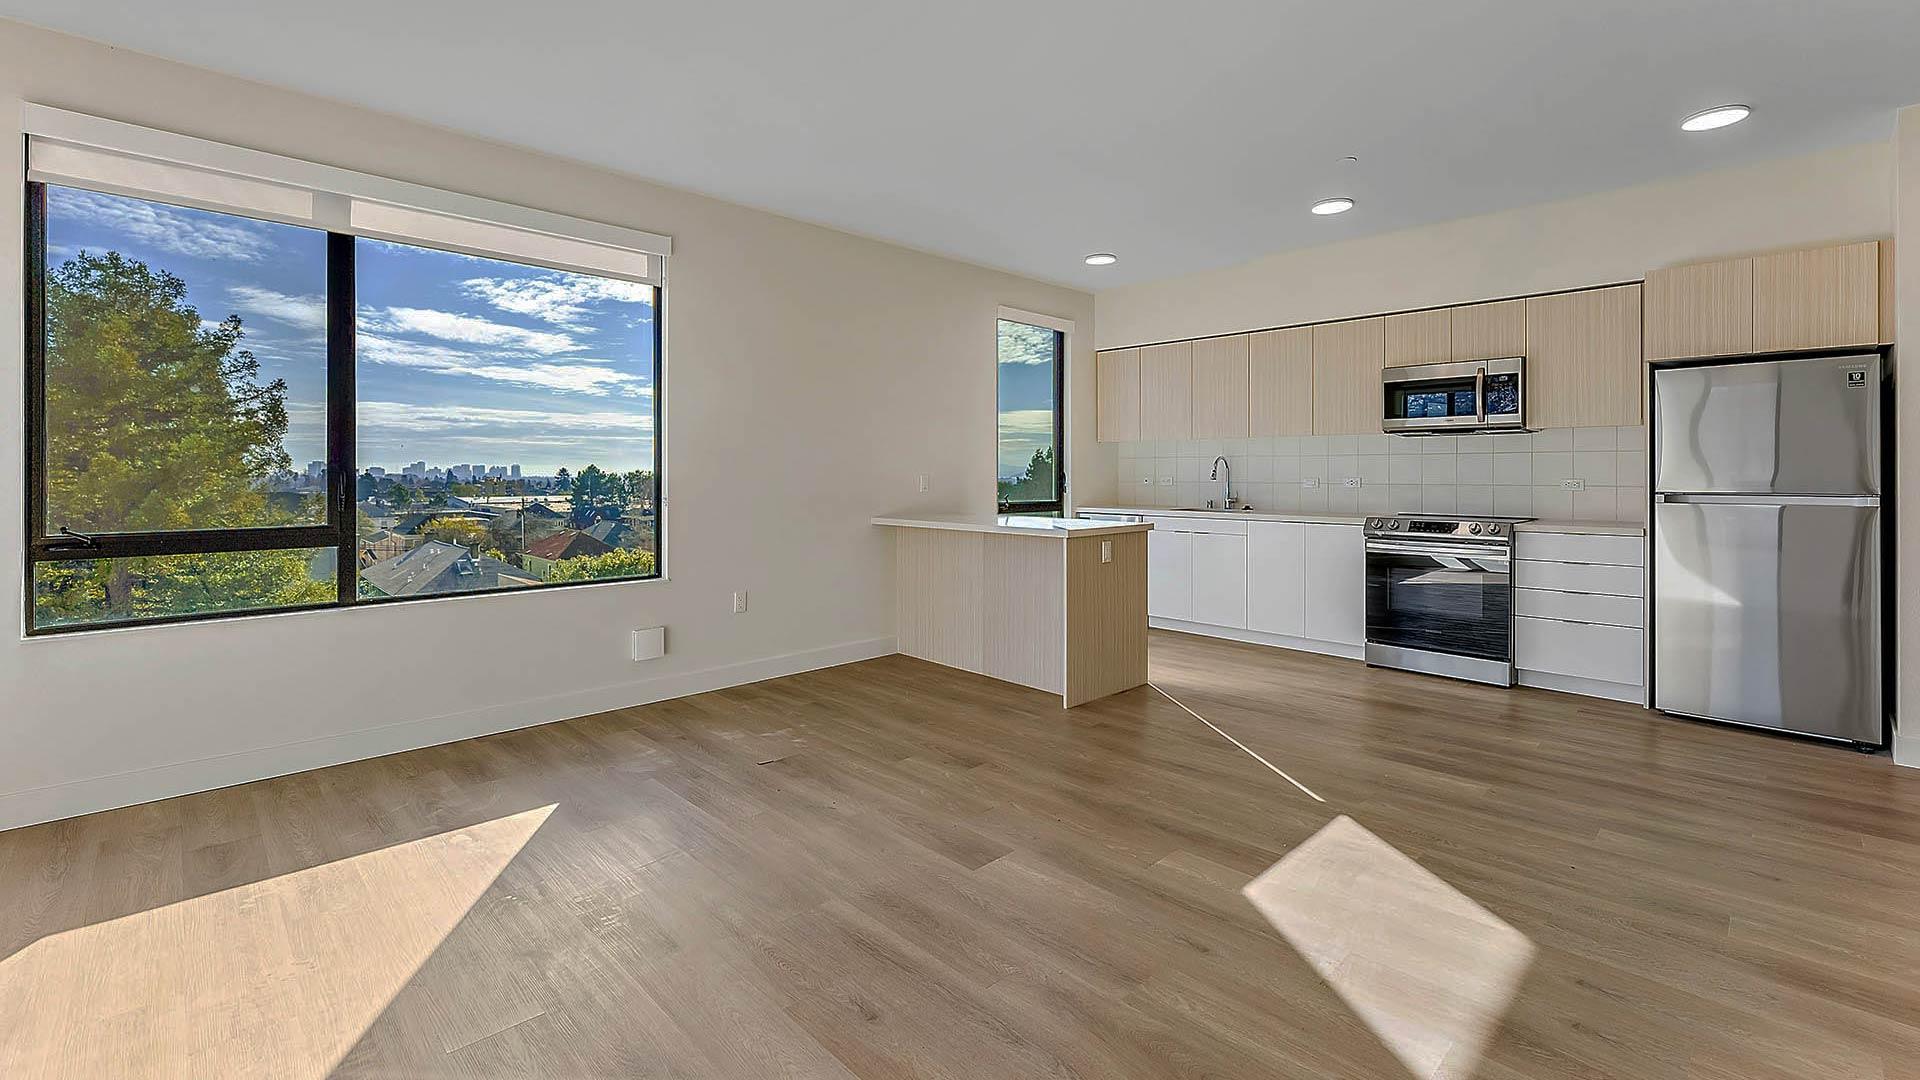 Blake apartments c7 floorplan livingroom kitchen view 2